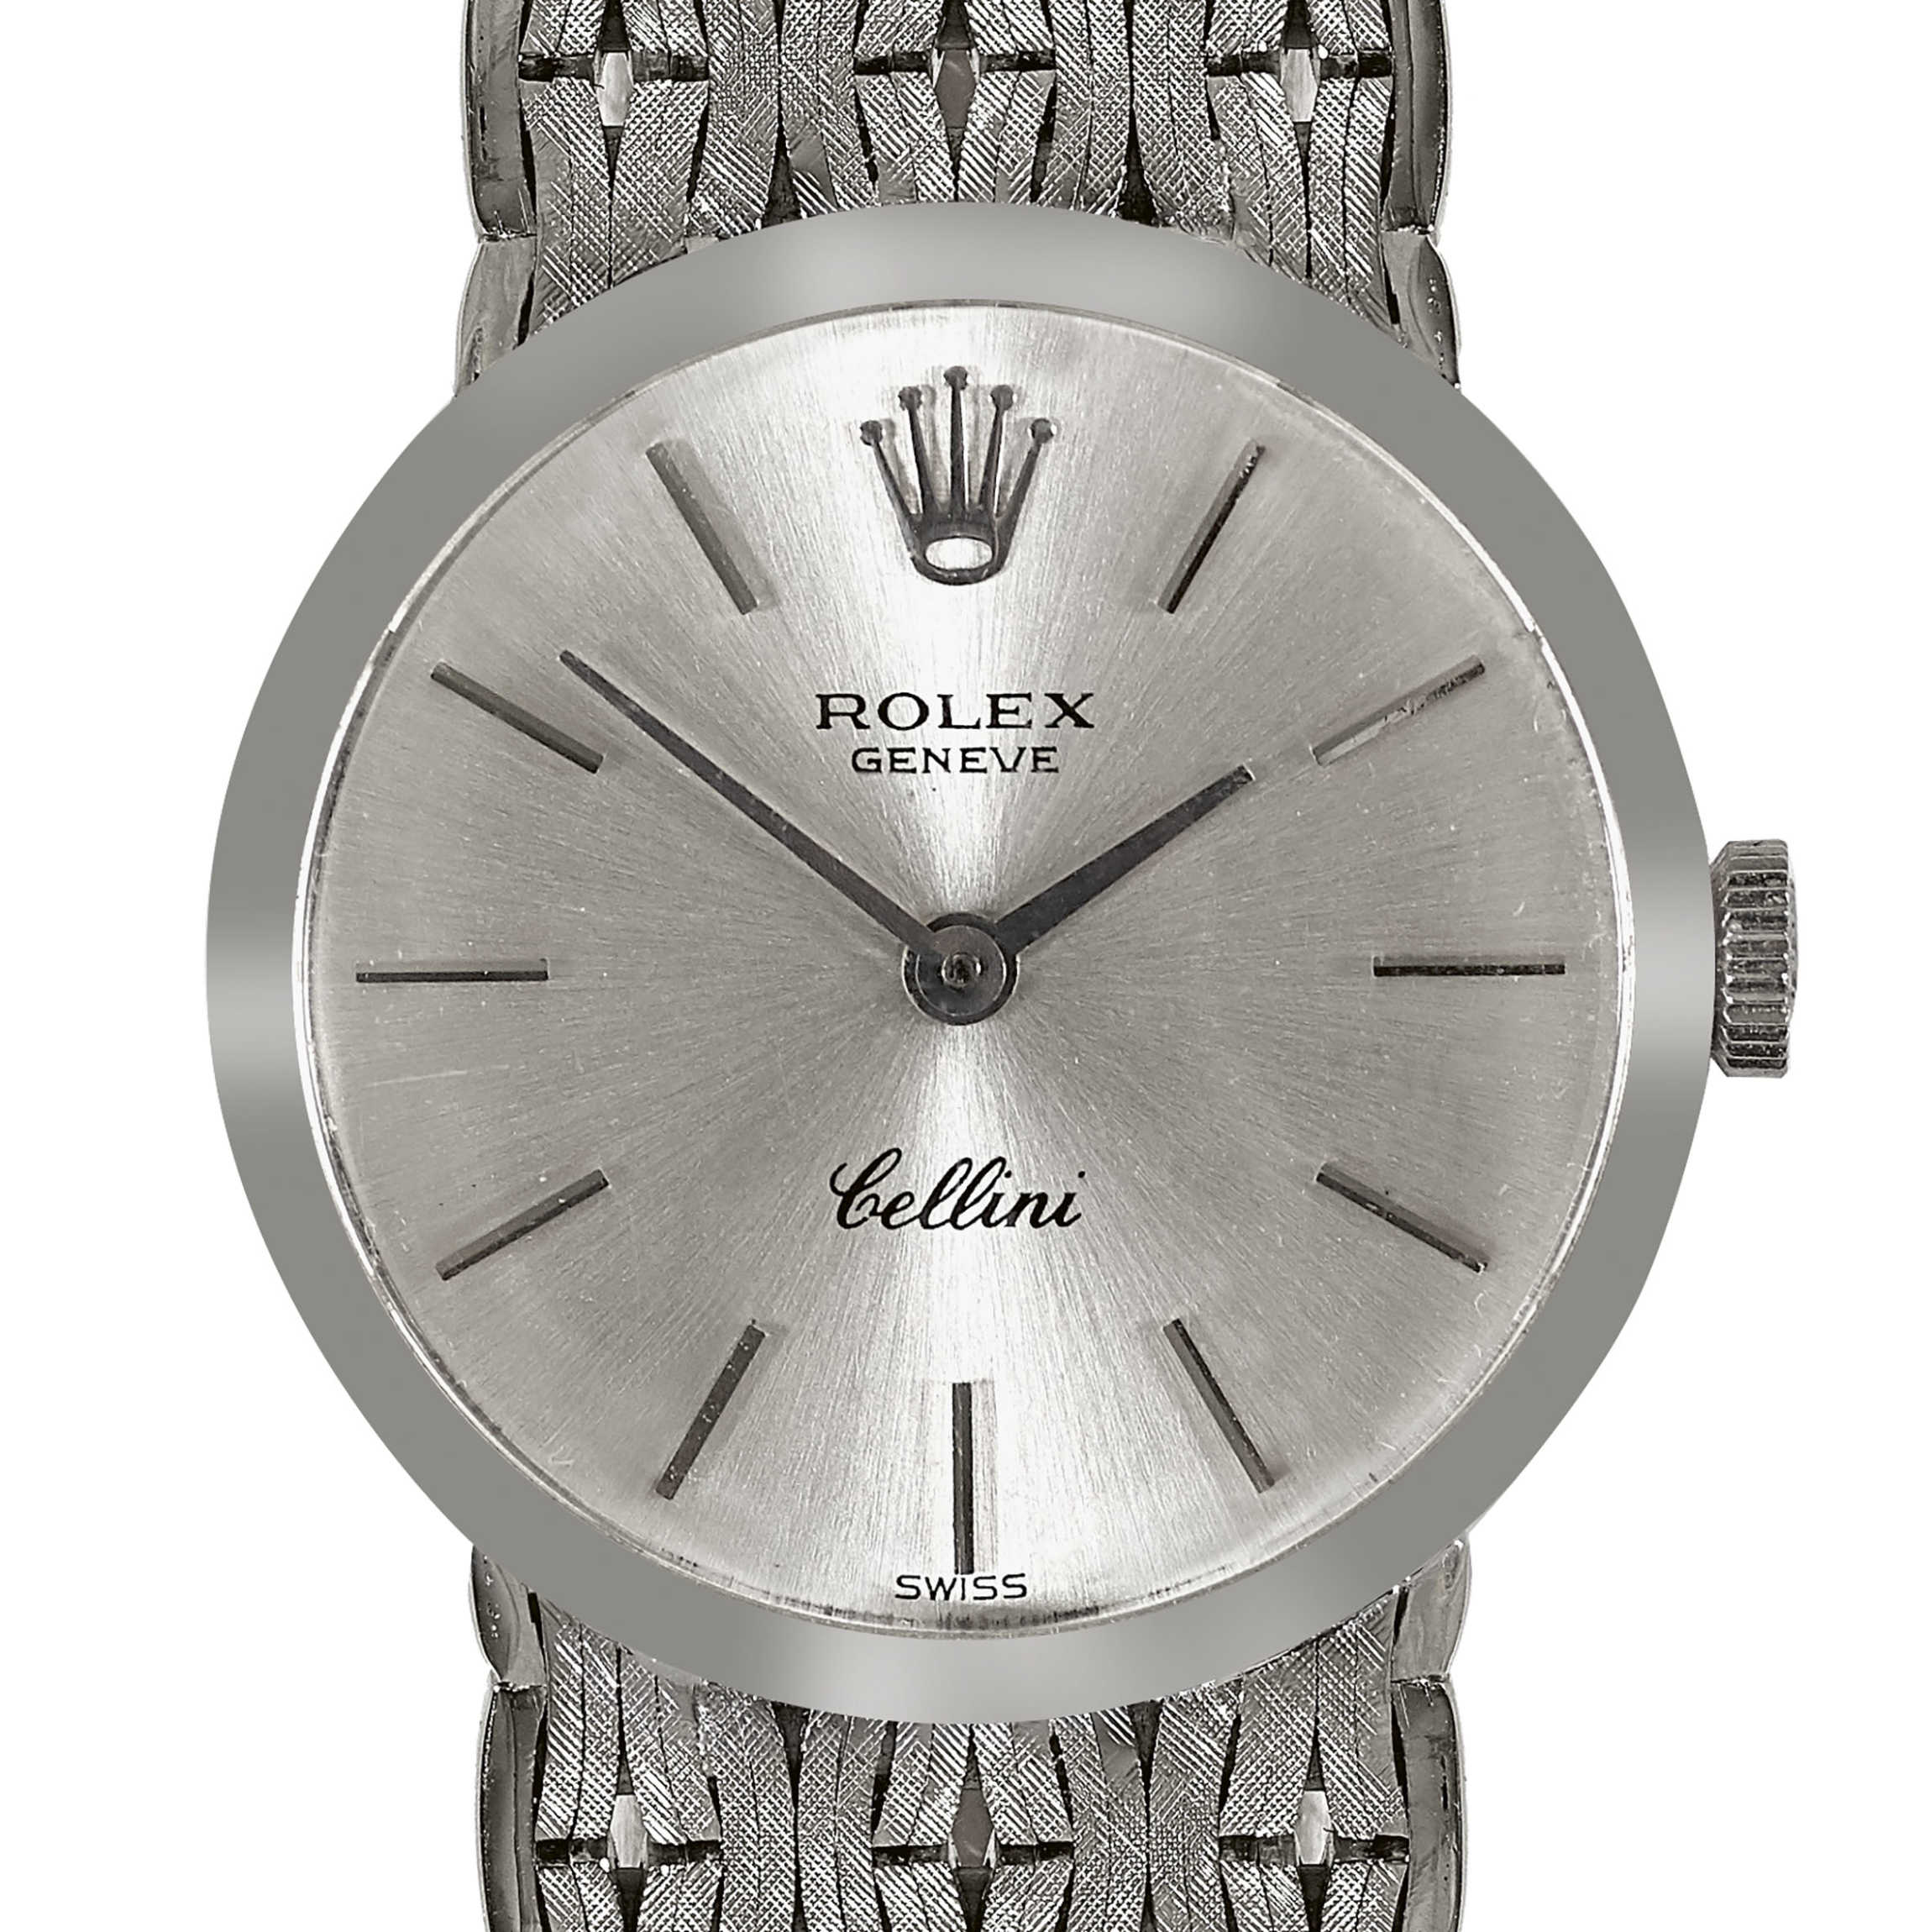 ROLEXLady's wristwatch "Cellini".Manufacturer/Manufaktur: Rolex, Geneva. Model: "Cellini". Year/